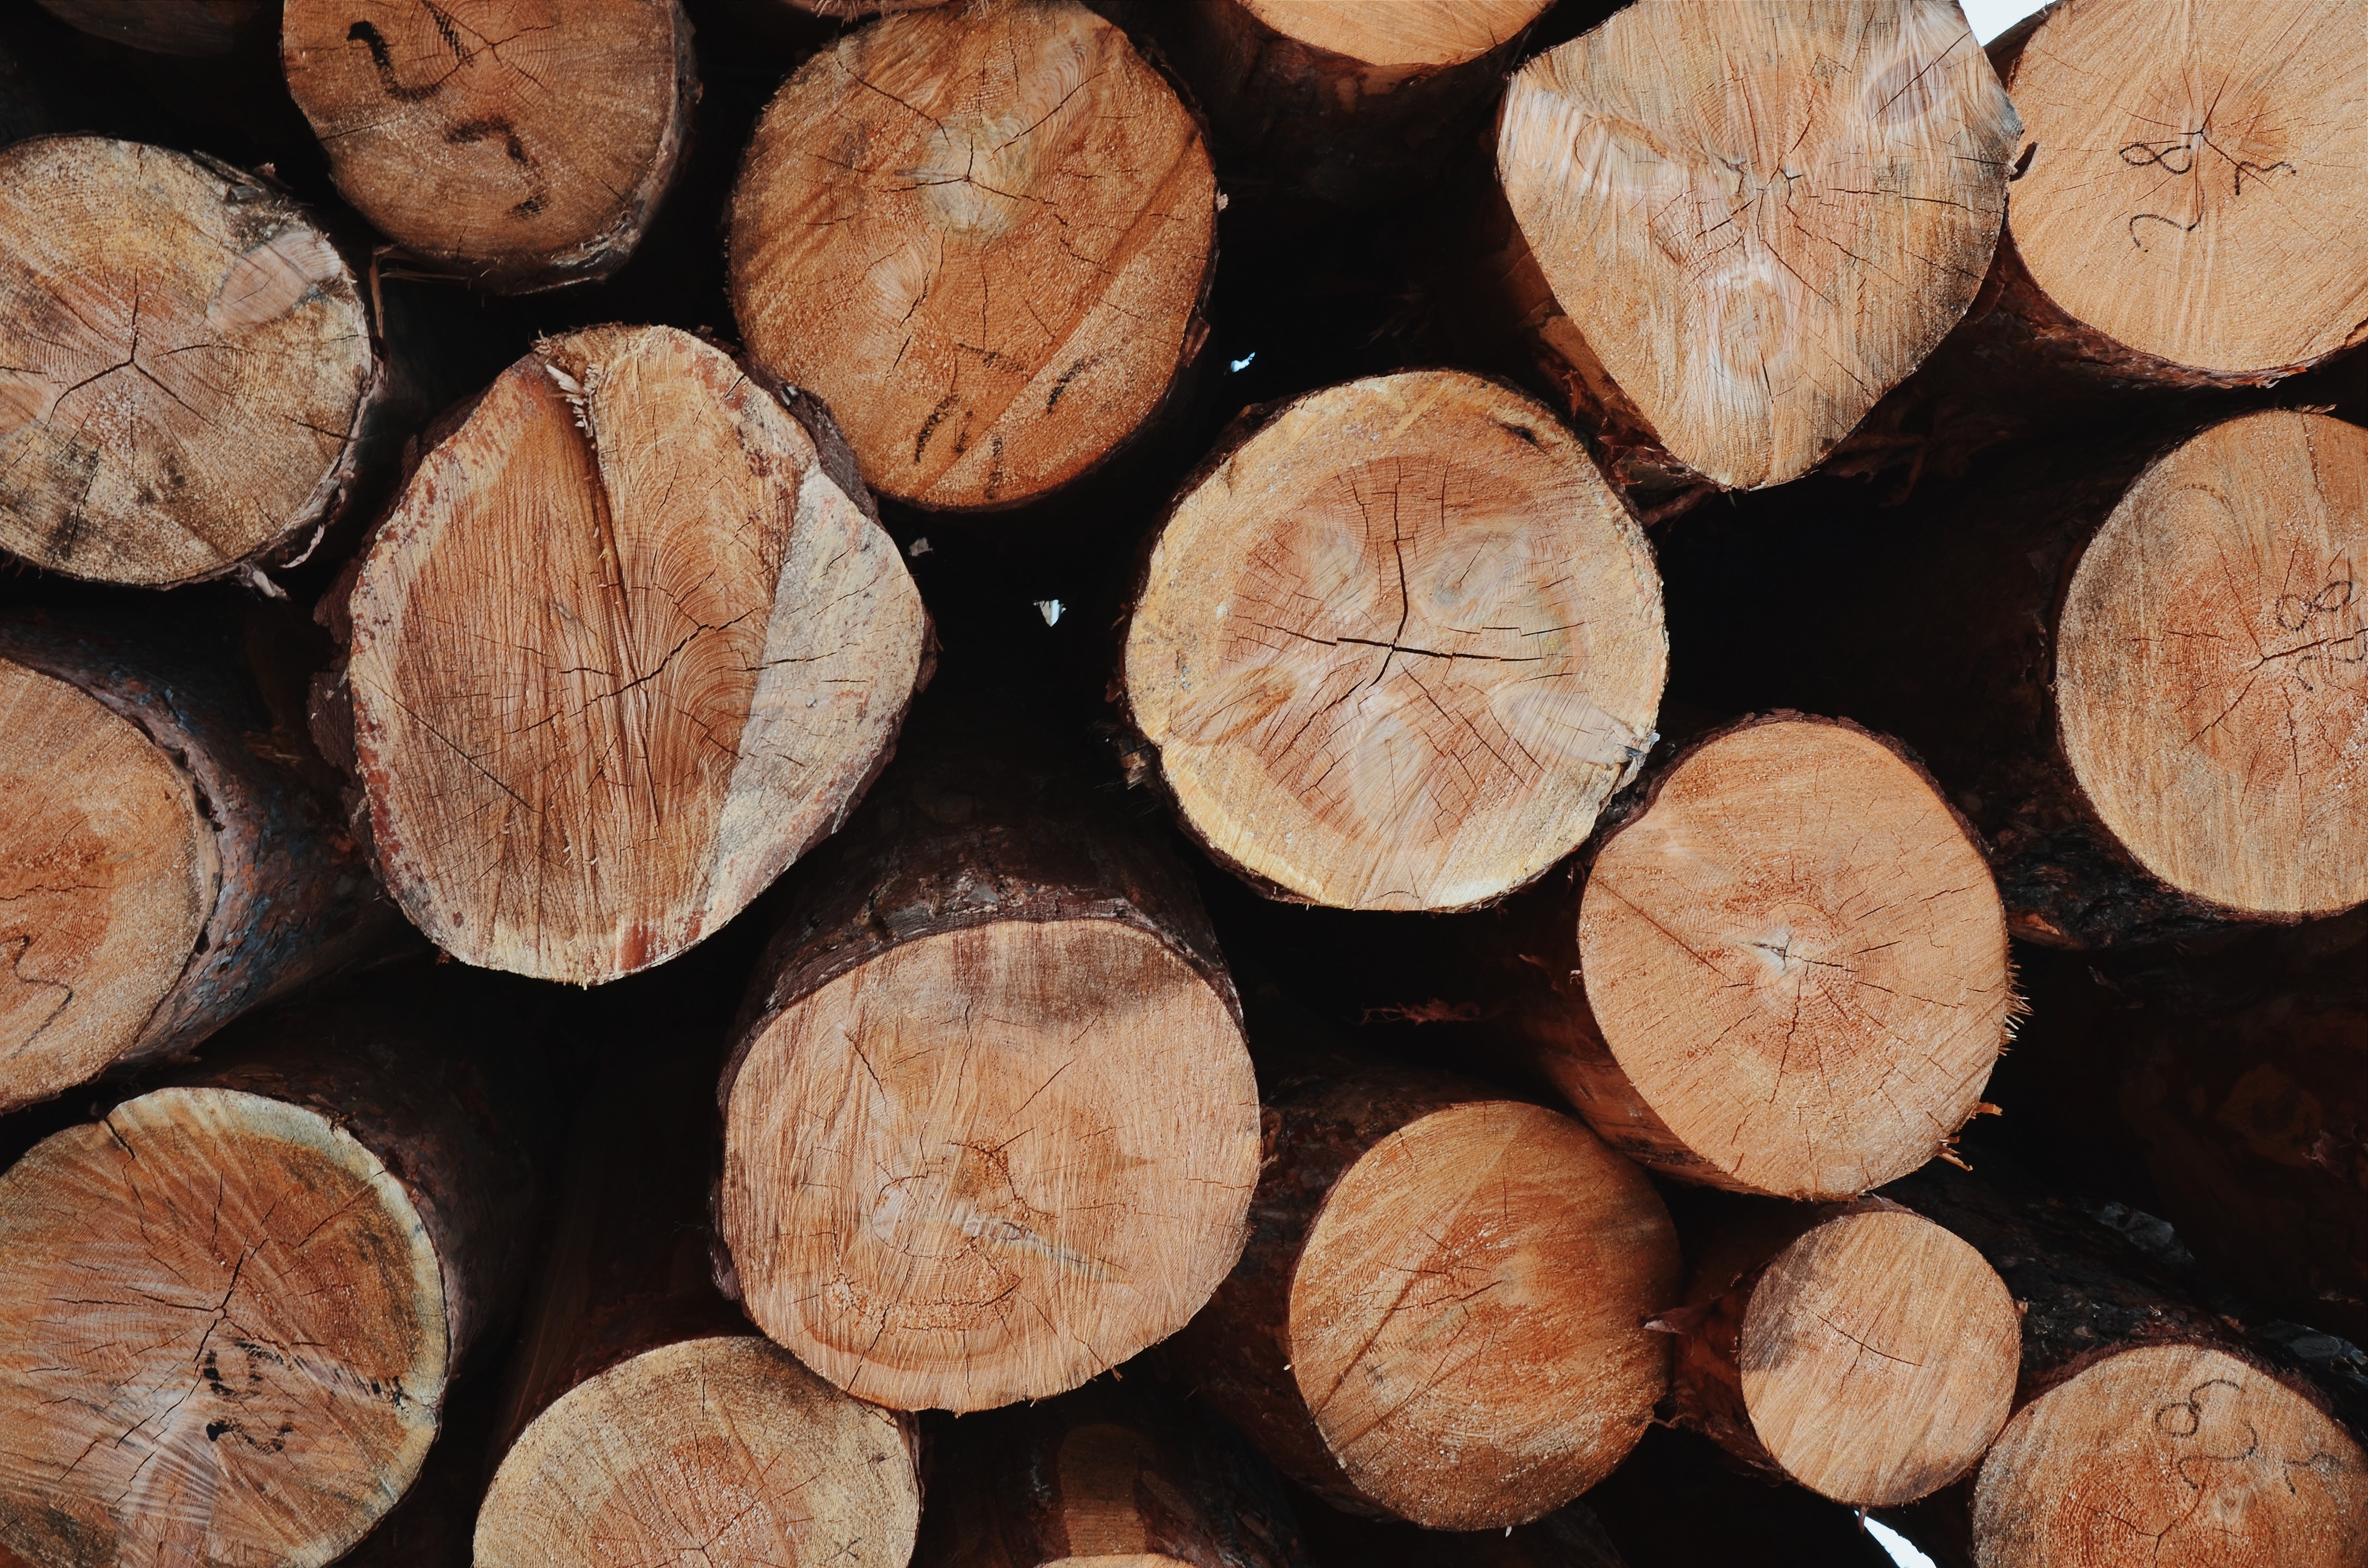 Heartwood vs sapwood